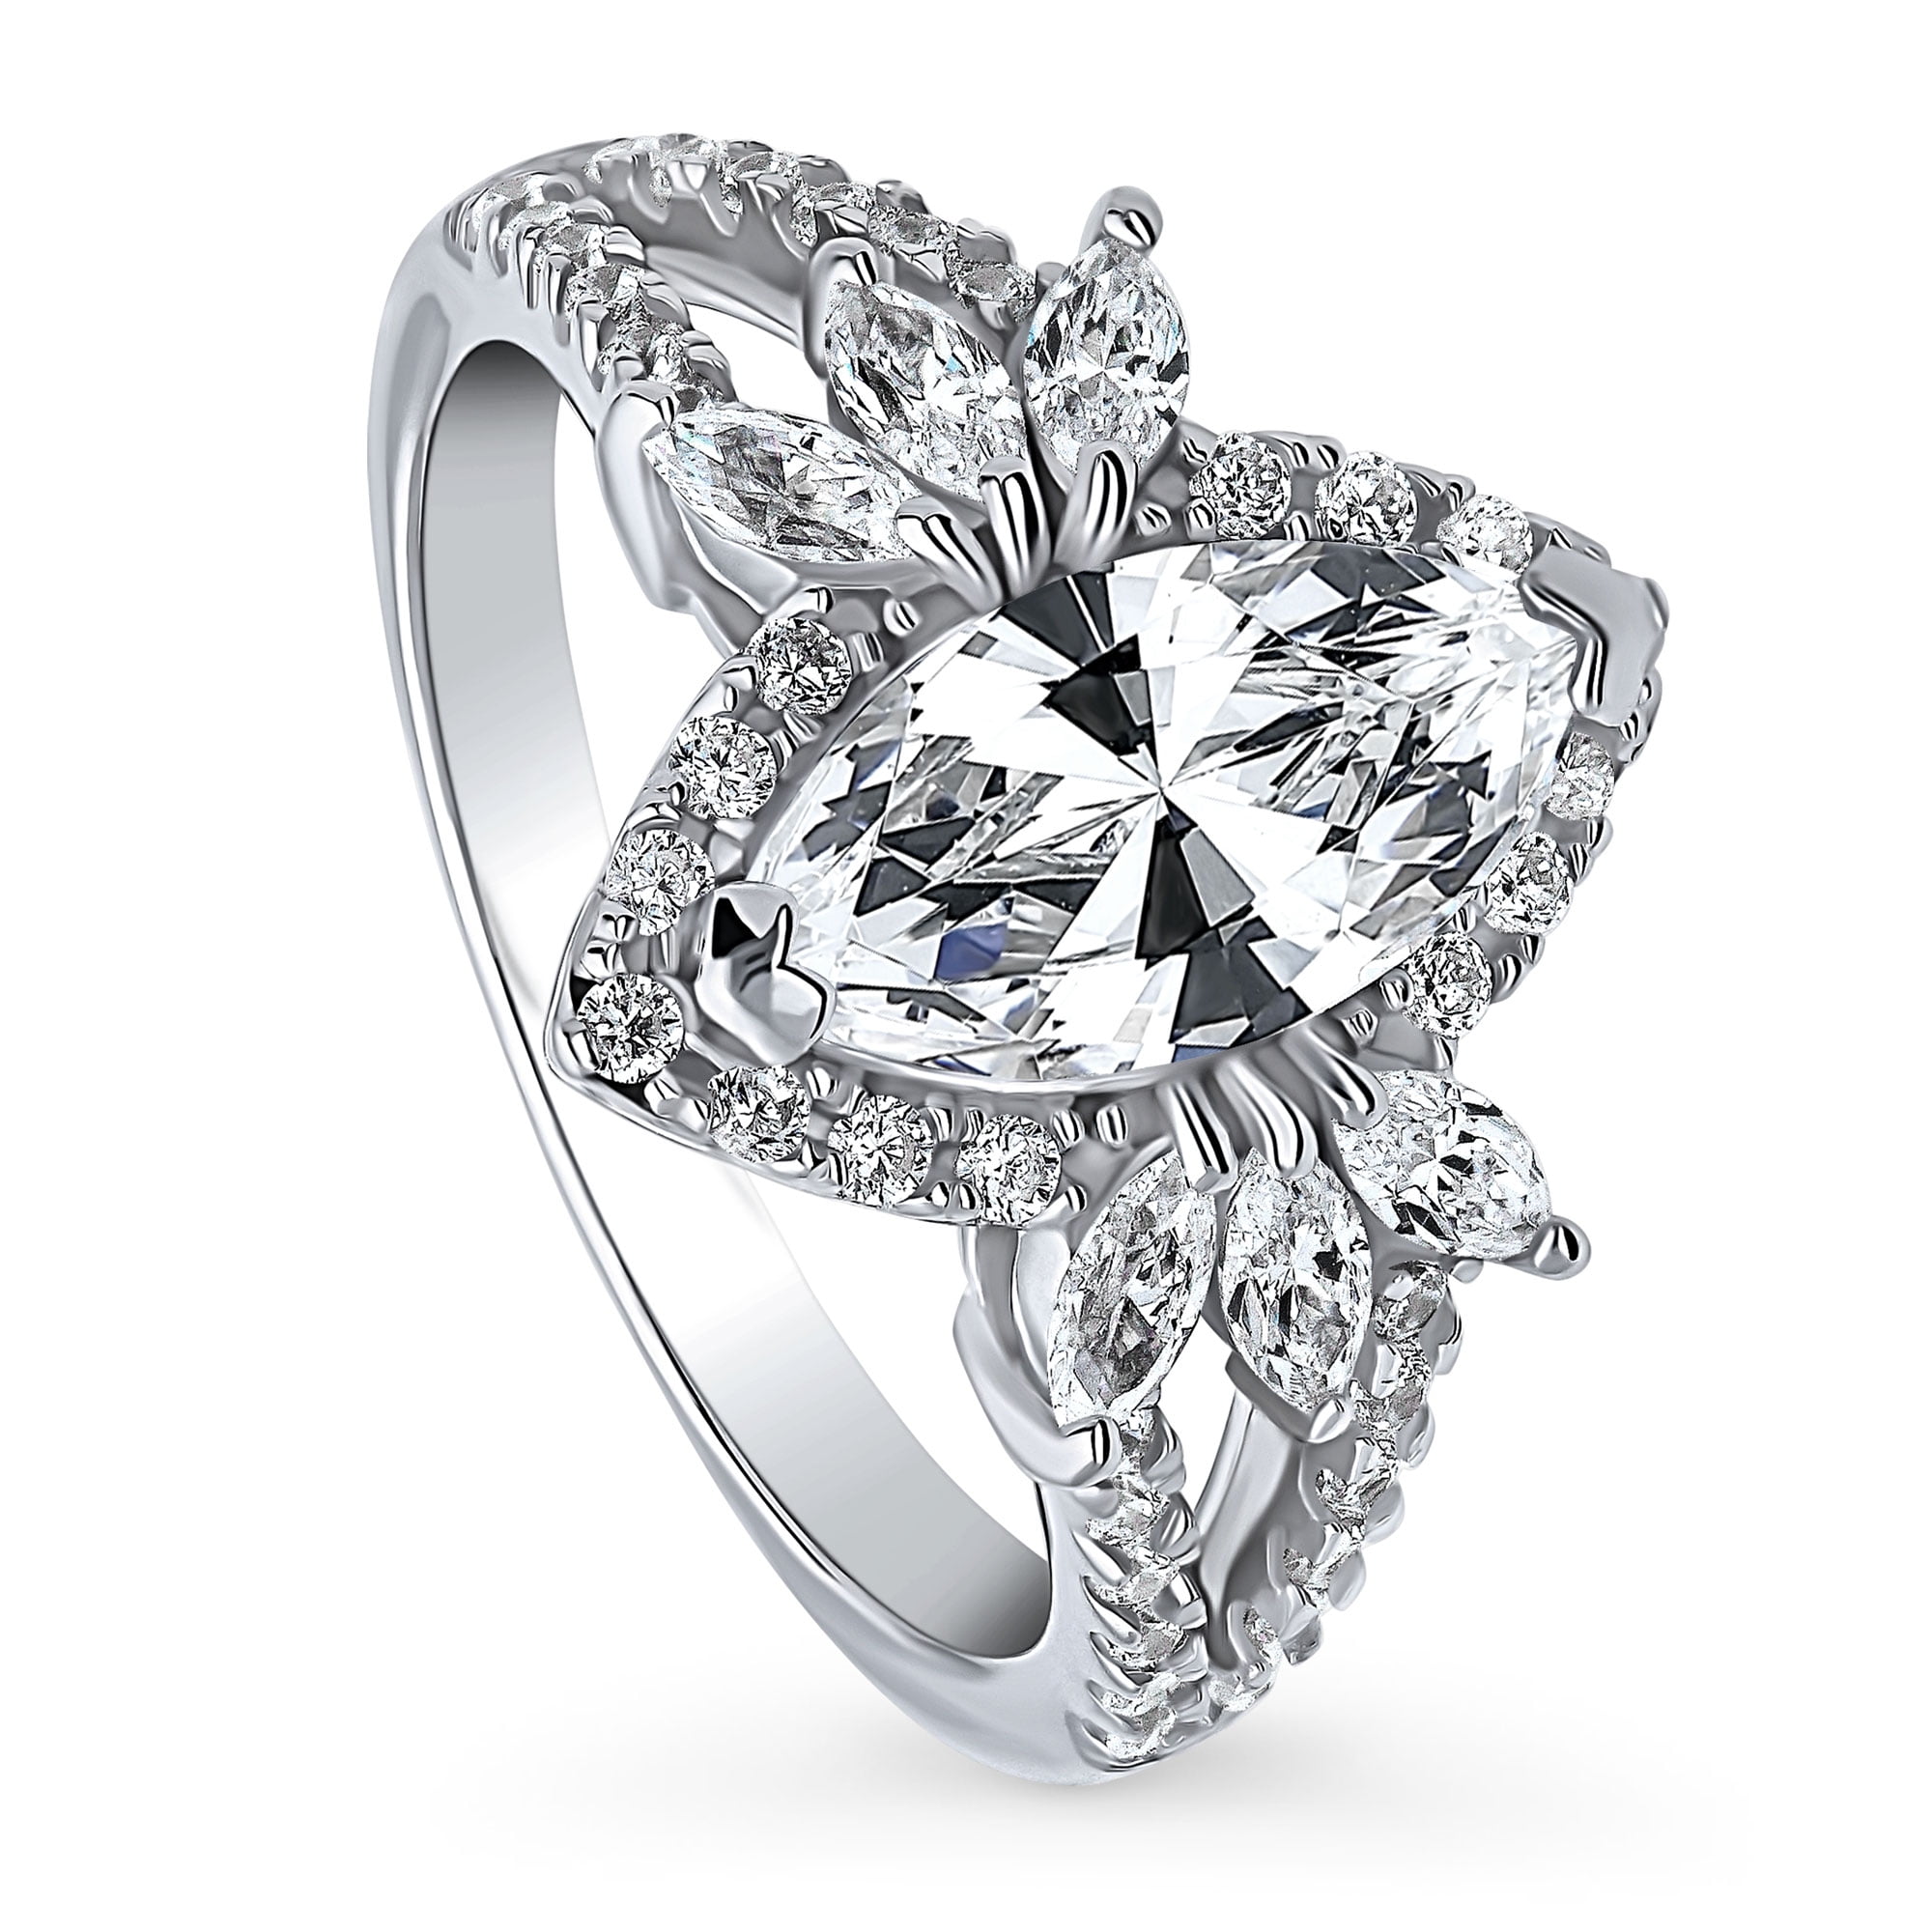 BERRICLE Sterling Silver CZ Halo Engagement Wedding Split Shank Ring Set 